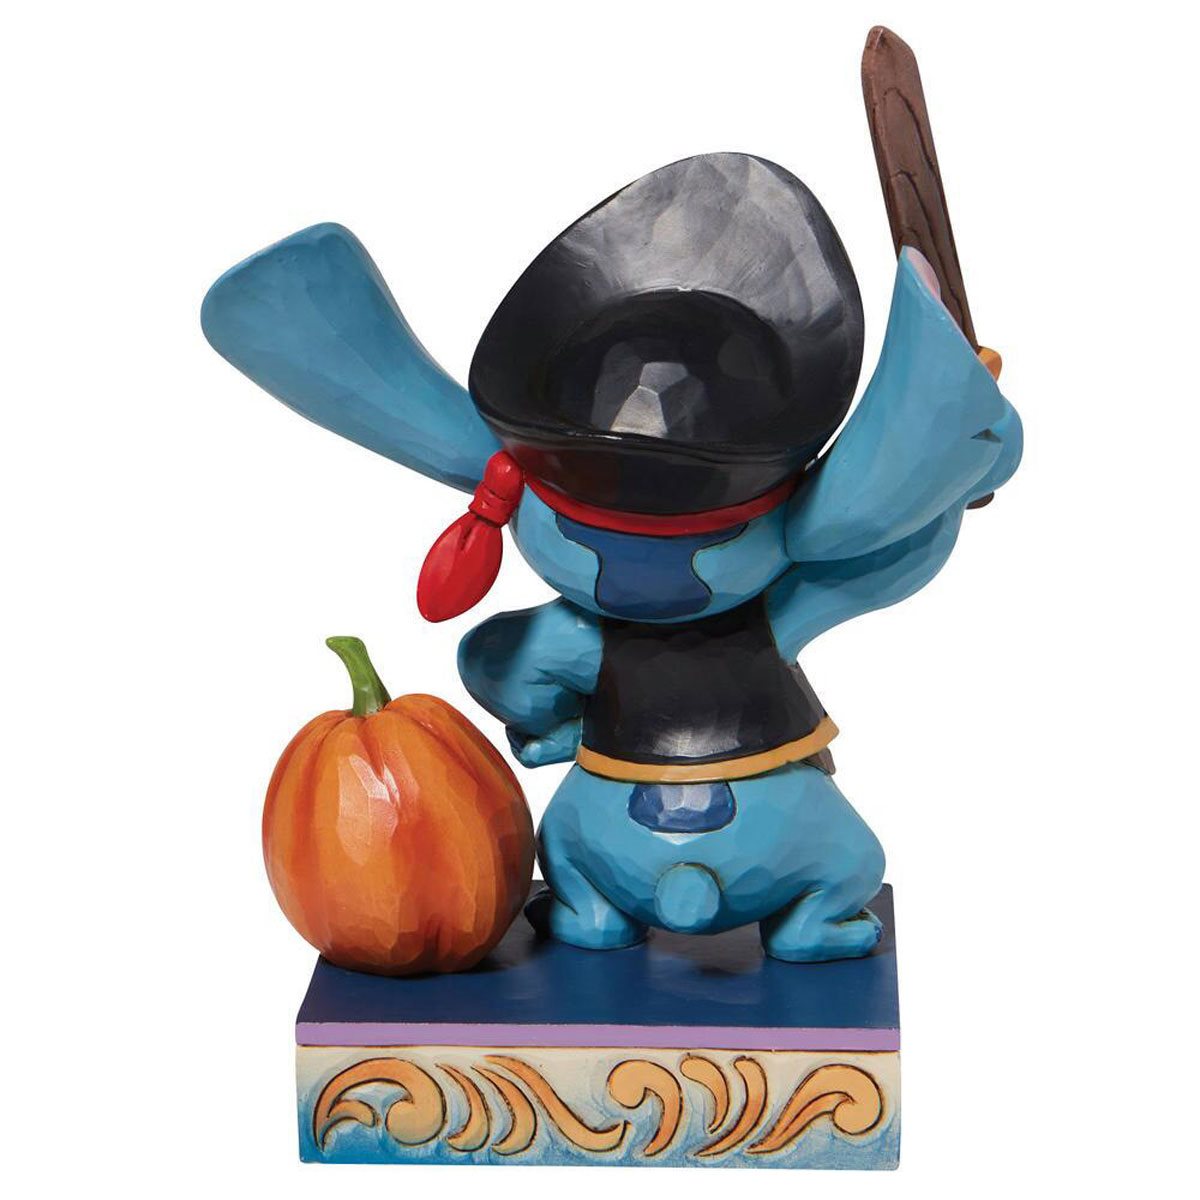 Enesco Disney Traditions Figurine Pirate Stitch